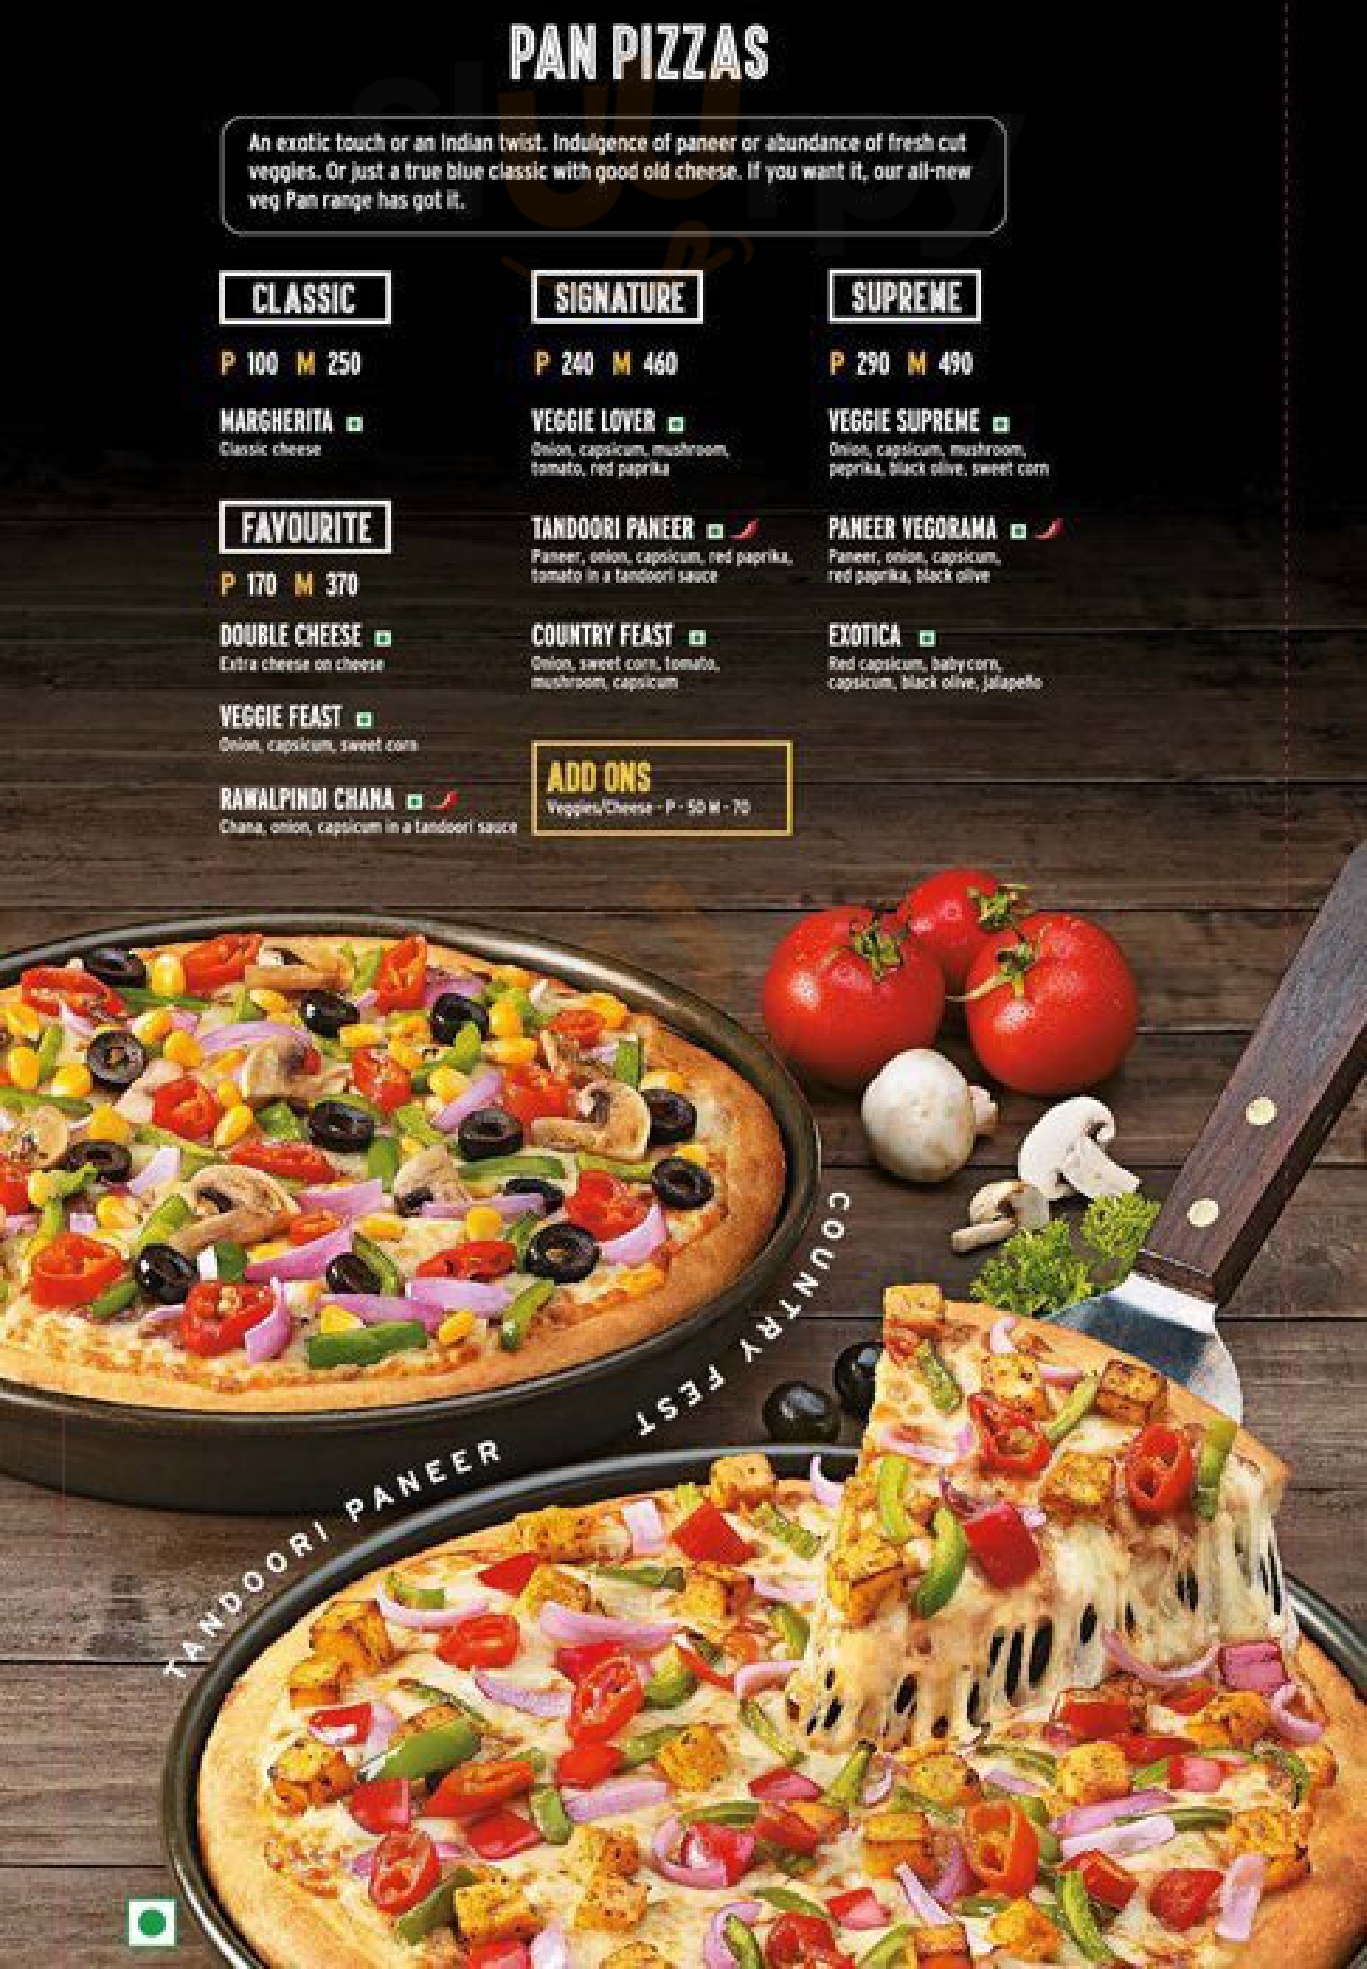 pizza hut menu price list